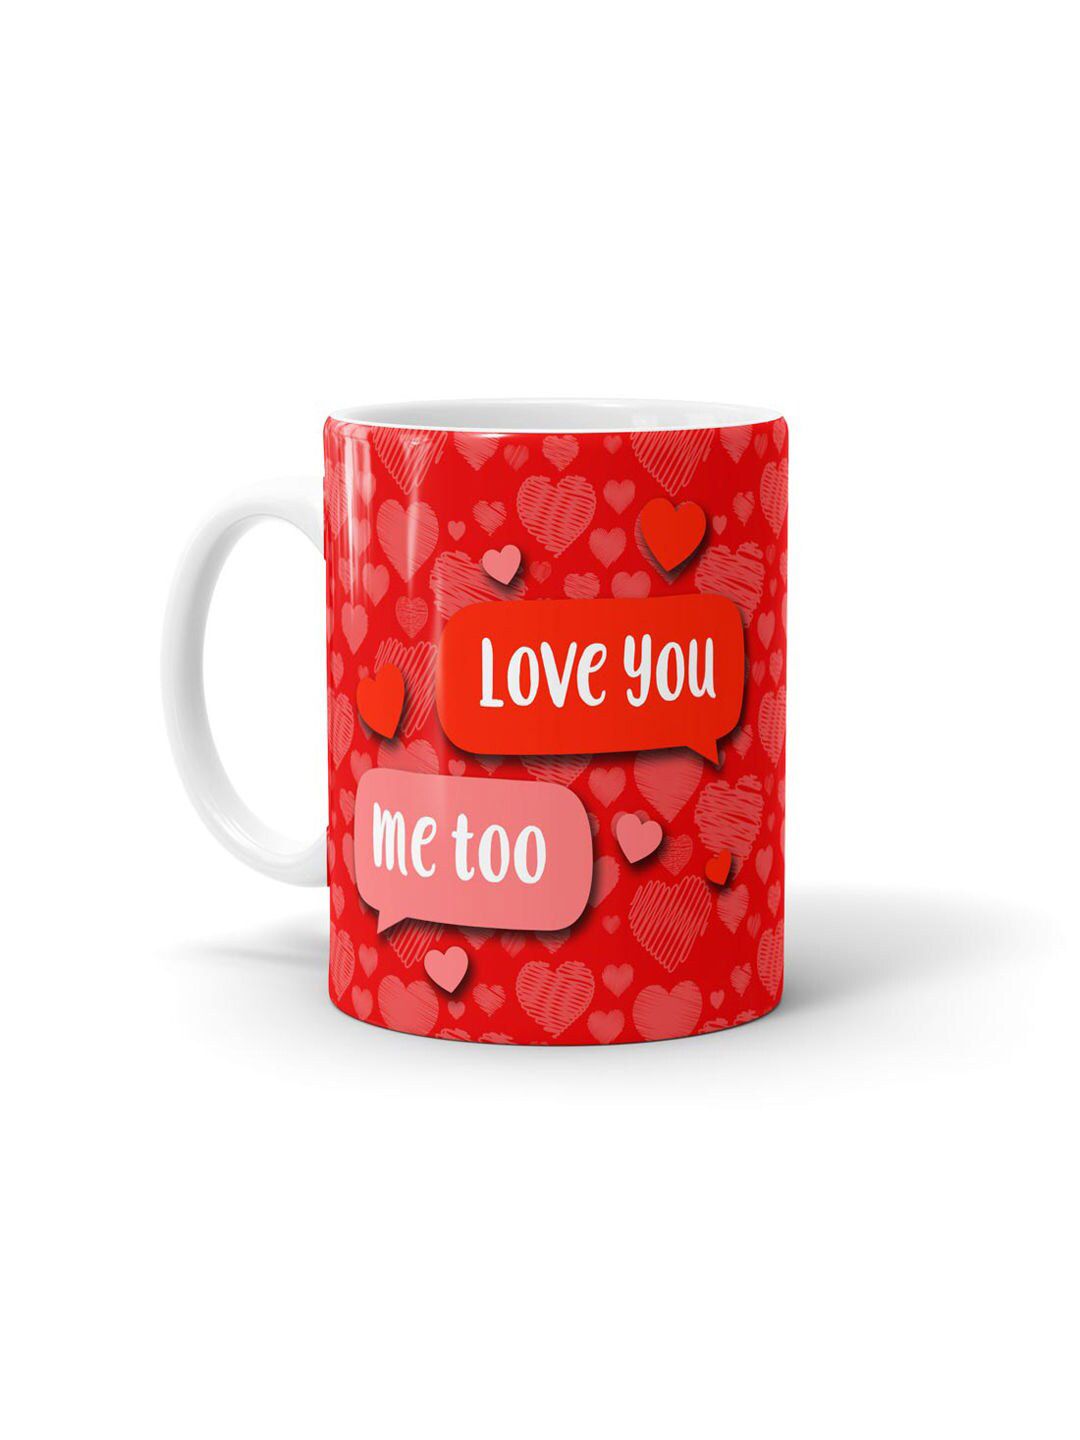 macmerise Red & White Printed Ceramic Glossy Mug Price in India